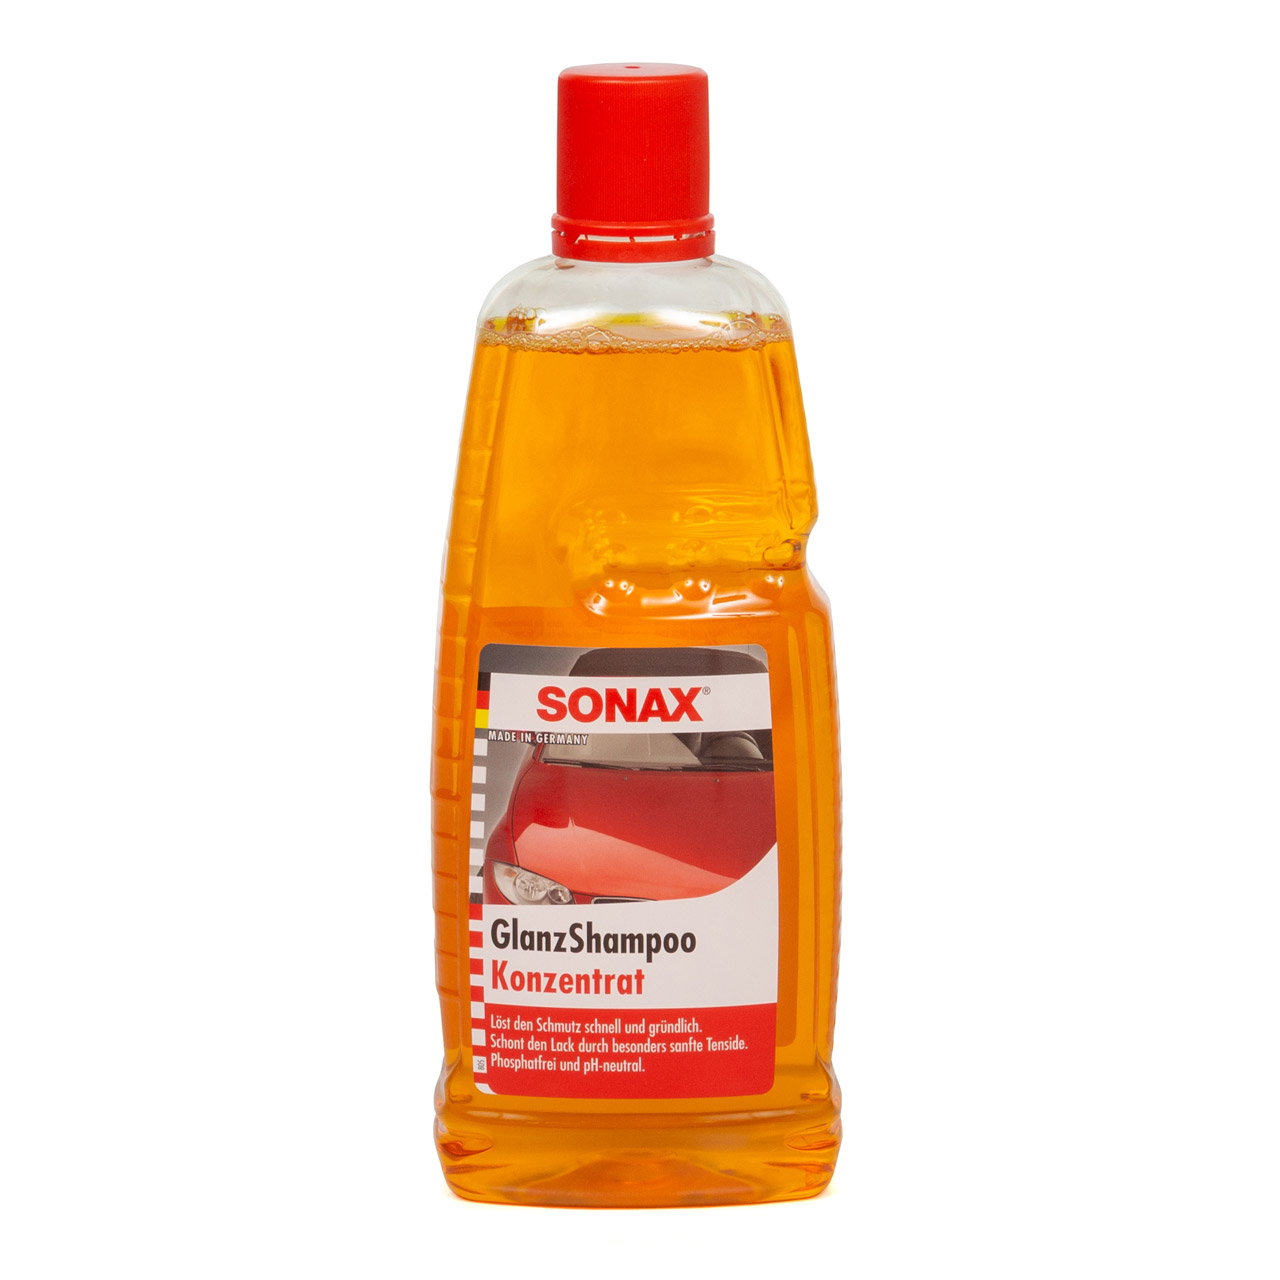 SONAX 314300 GlanzShampoo Konzentrat Auto-Shampoo Autoshampoo 1 Liter